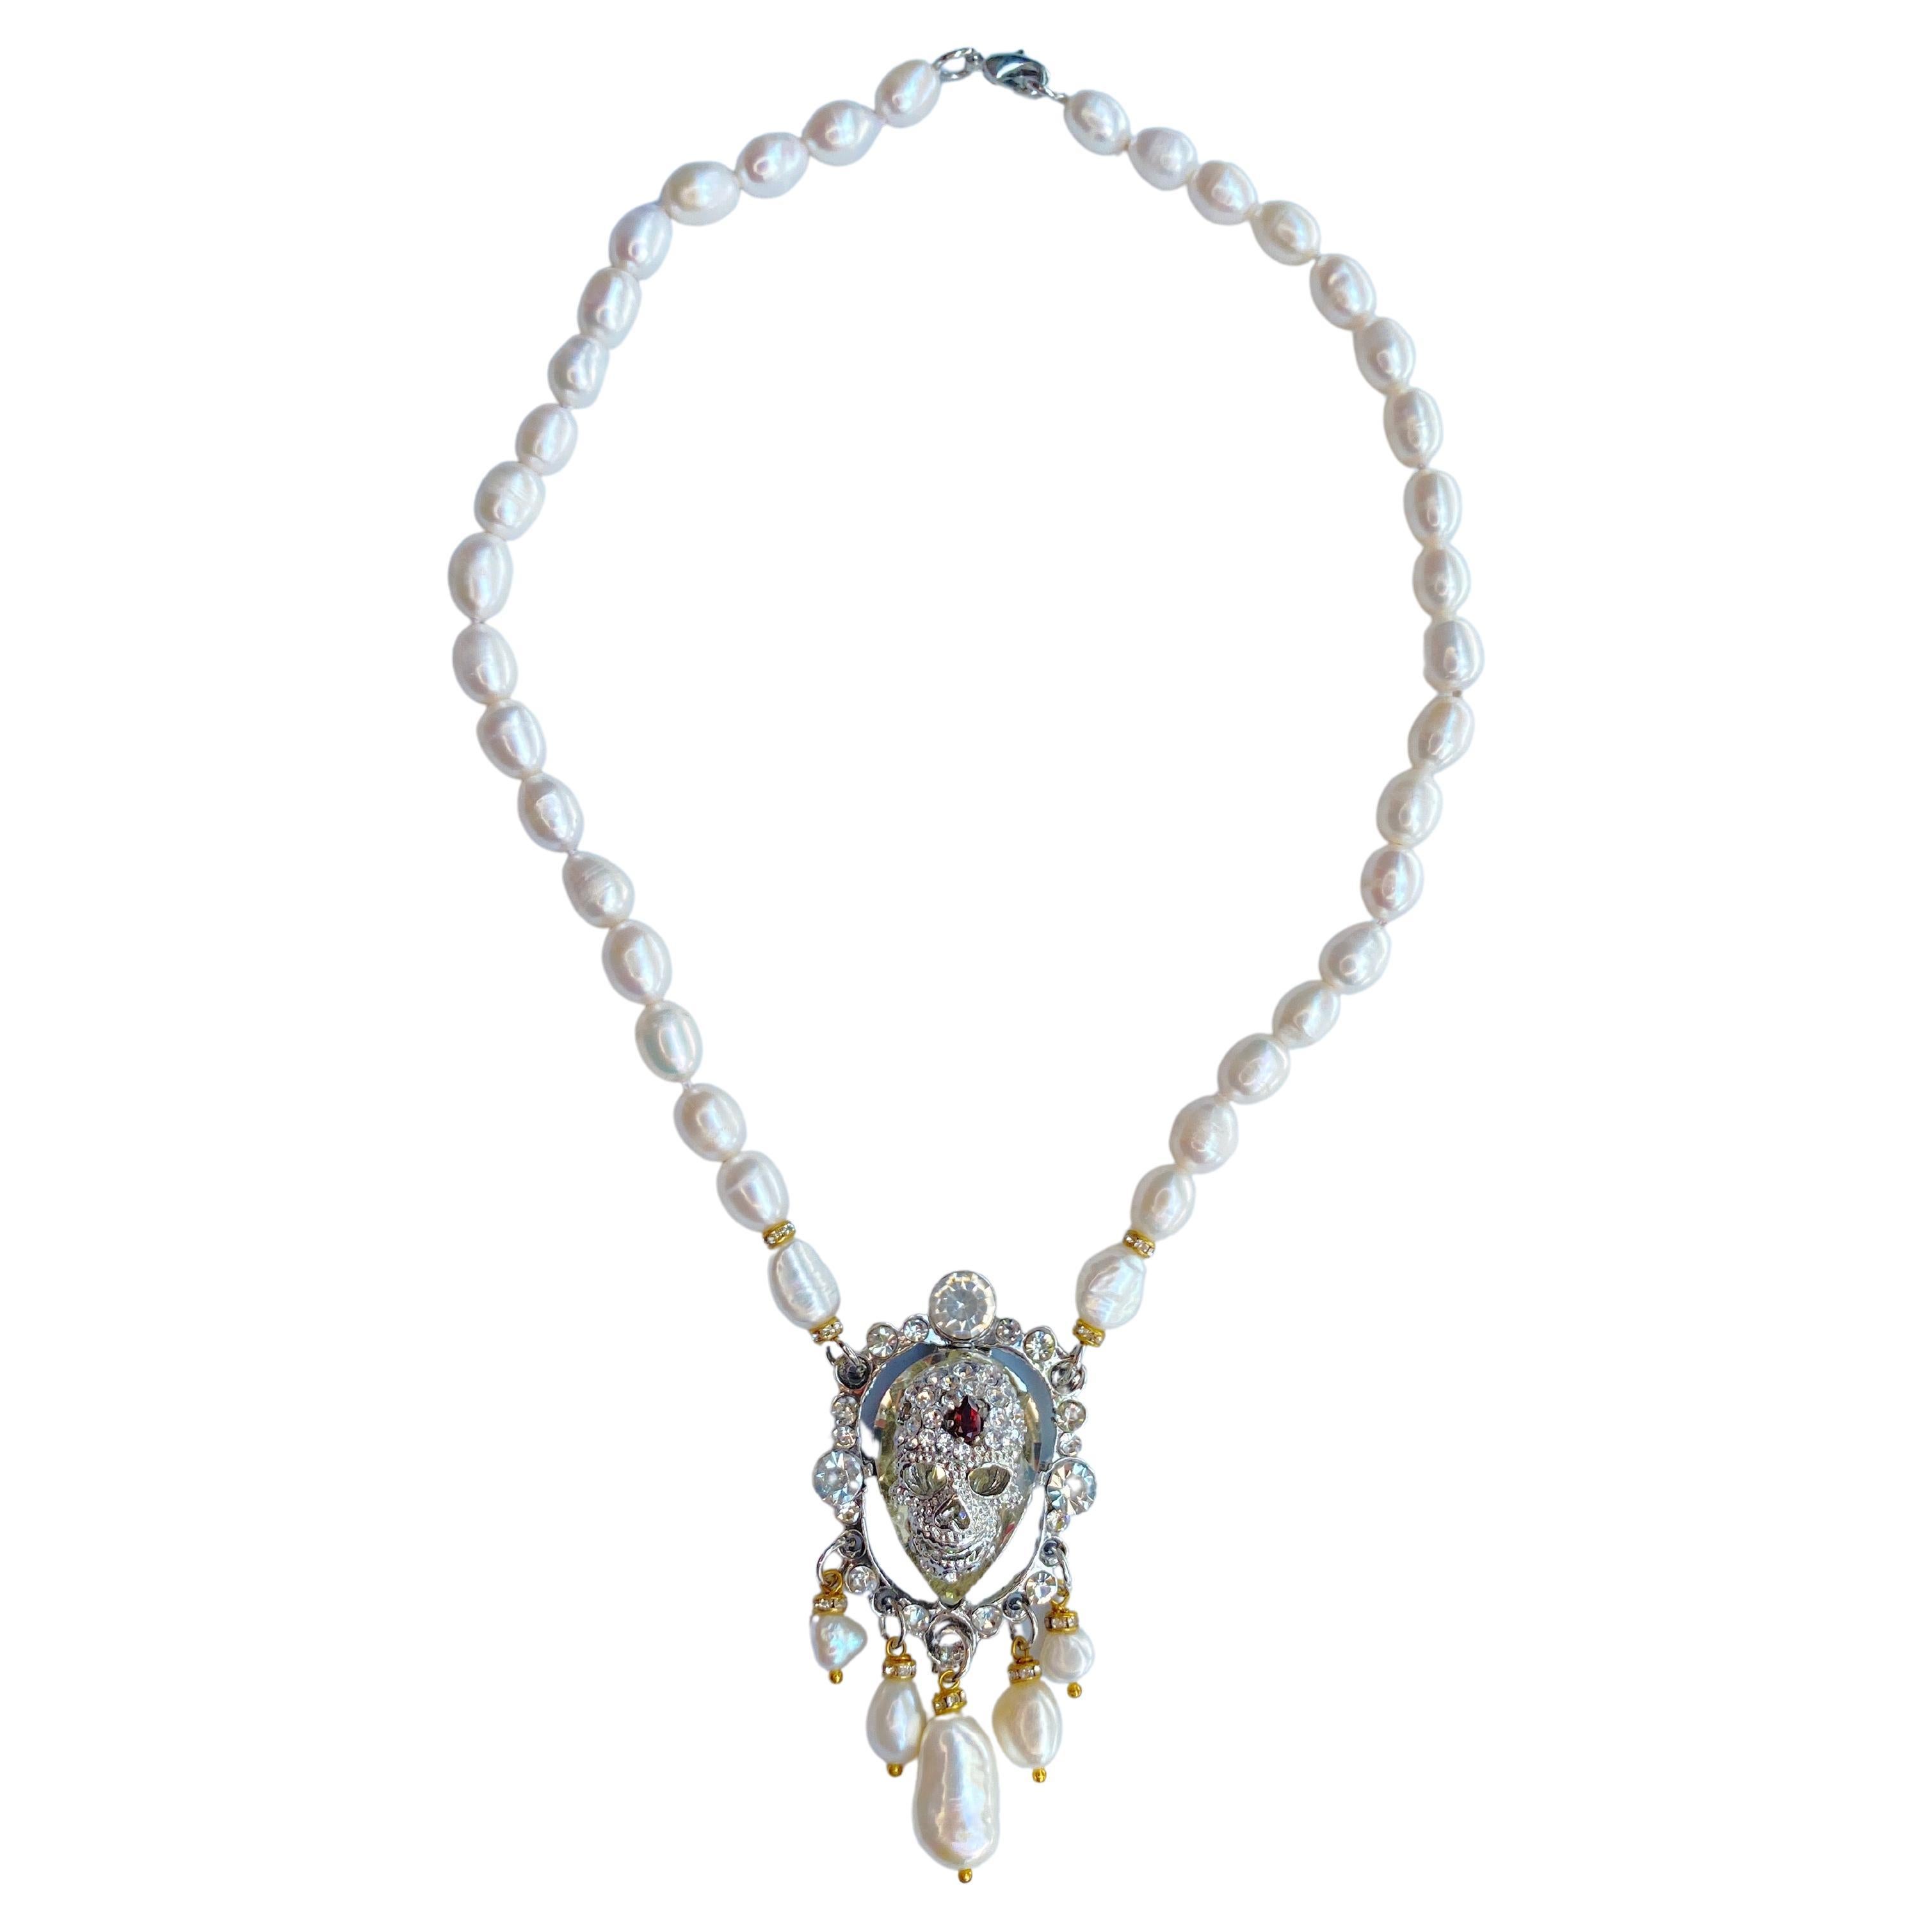 Skull, Garnet, freshwater pearl and crystal necklace by Sebastian Jaramillo